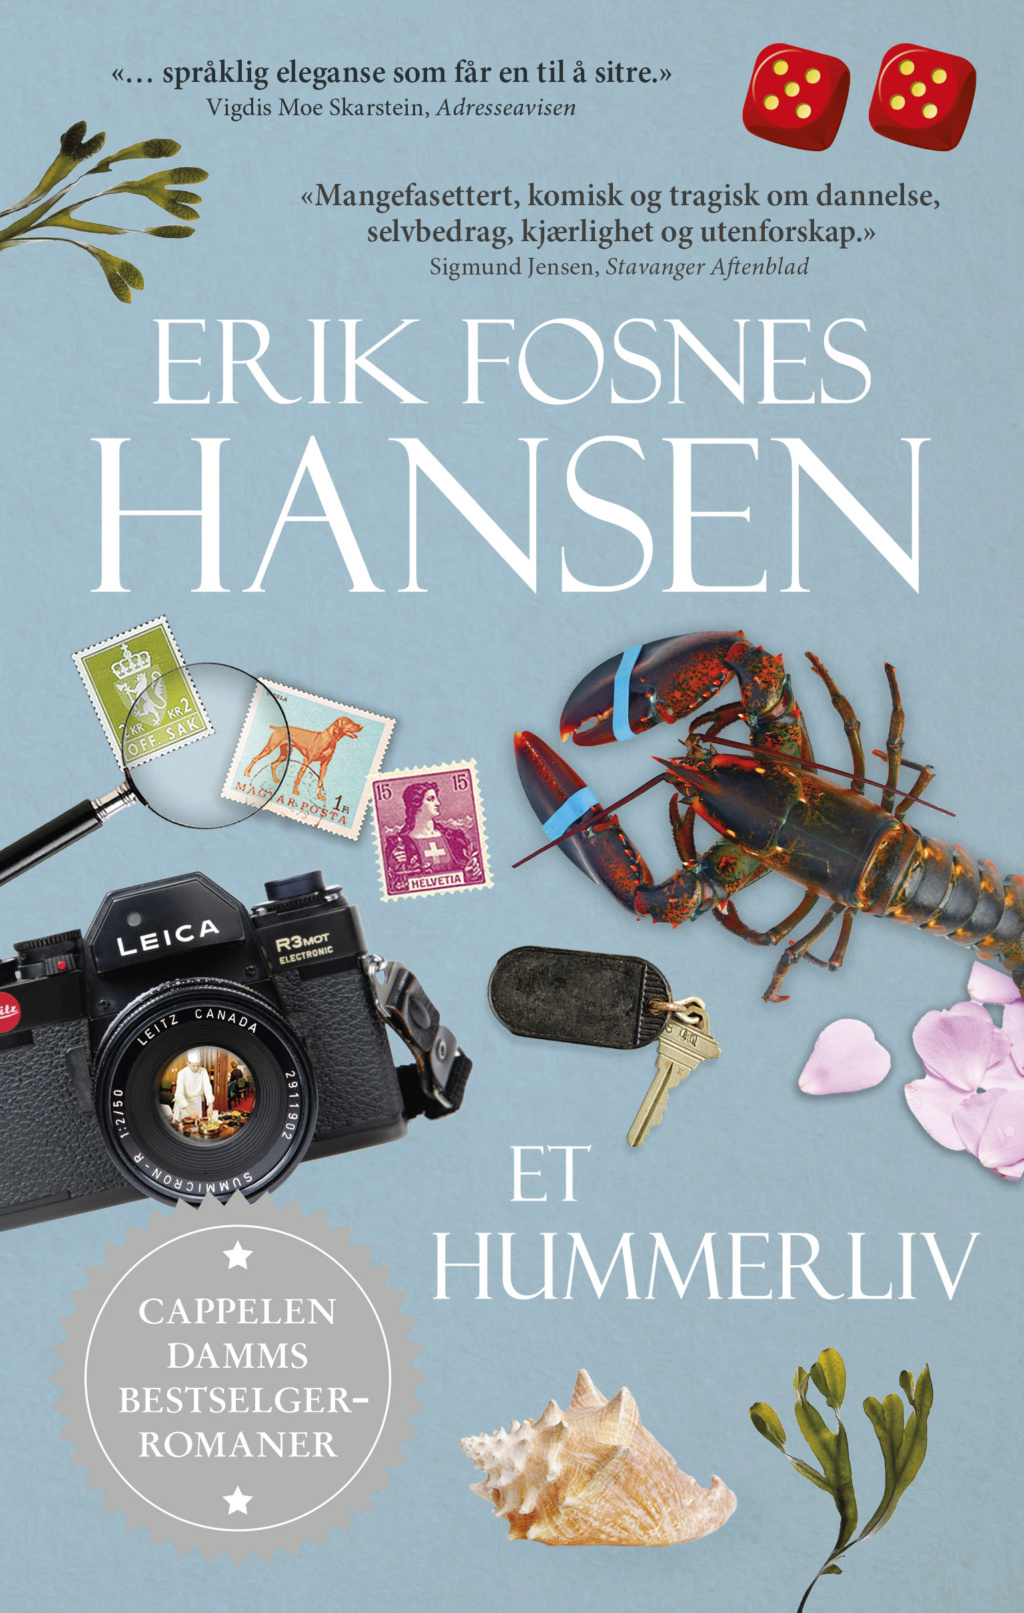 Erik Fosnes Hansen  A928